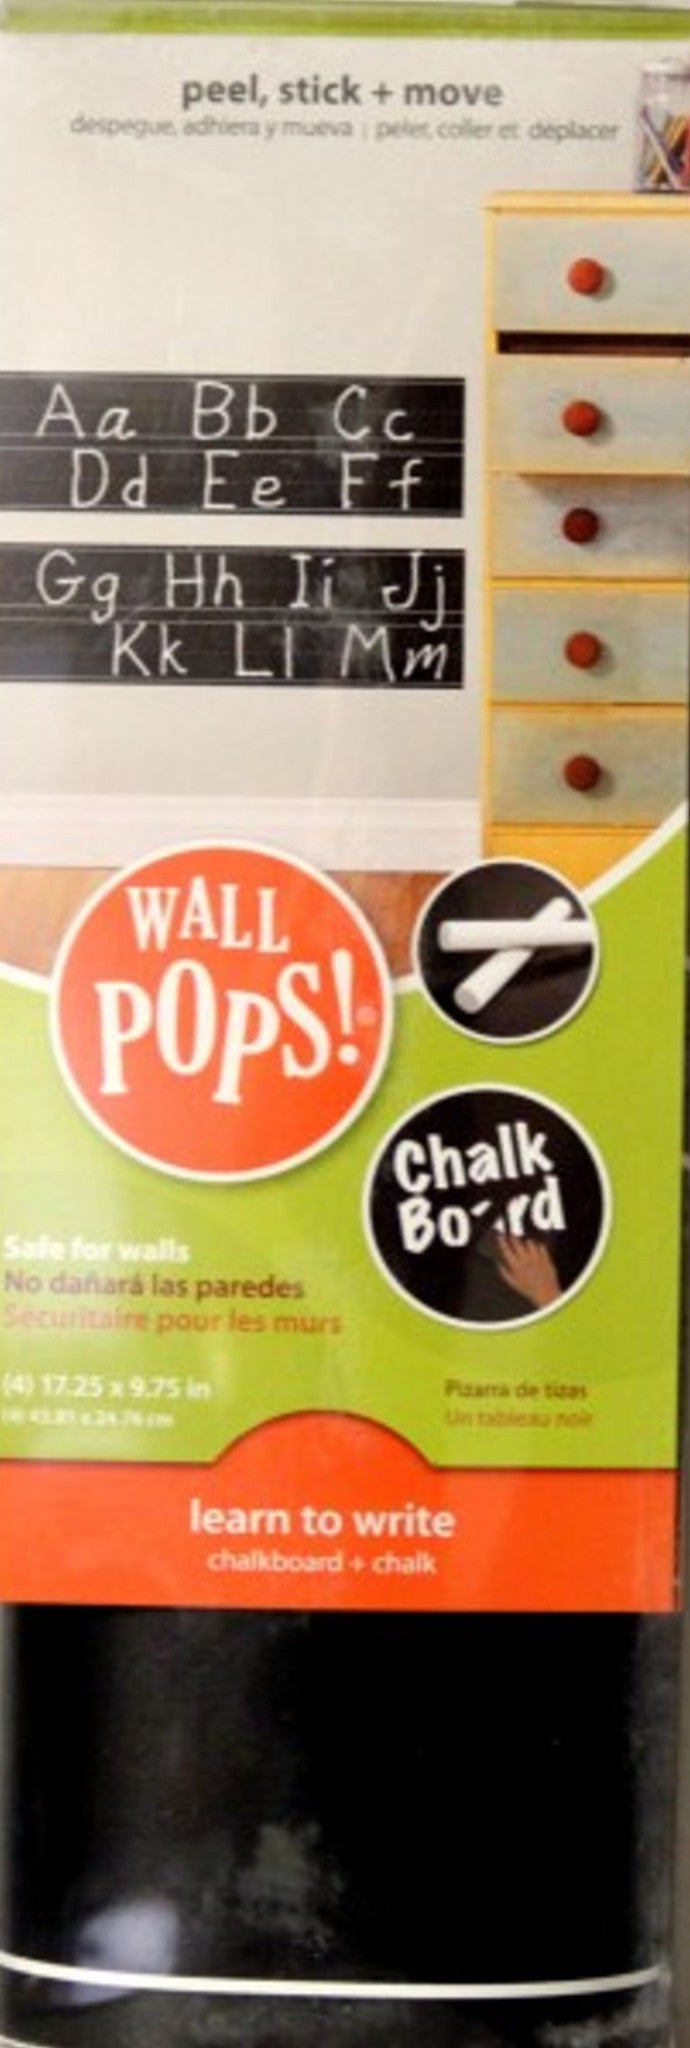 Brewster Home Fashions Wall Pops Learn To Write Chalkboard + Chalk - SCRAPBOOKFARE